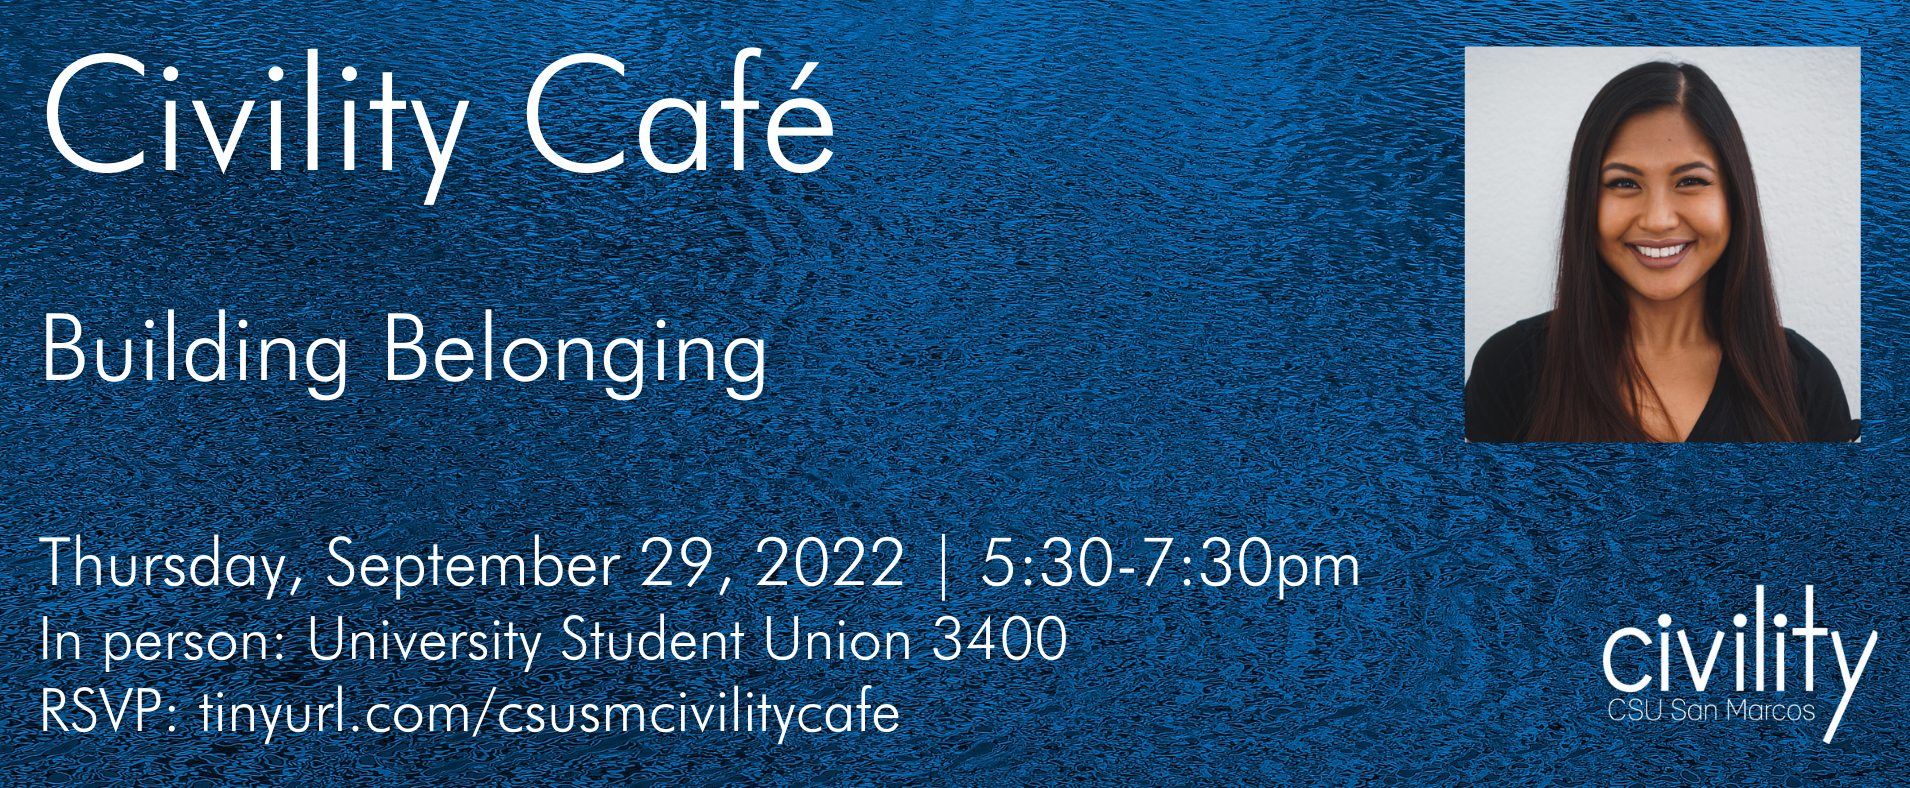 RSVP today! - Civility Café | Building Belonging - Thursday, September 29, 2022 - 5:30pm to 7:30pm - University Student Union 3400